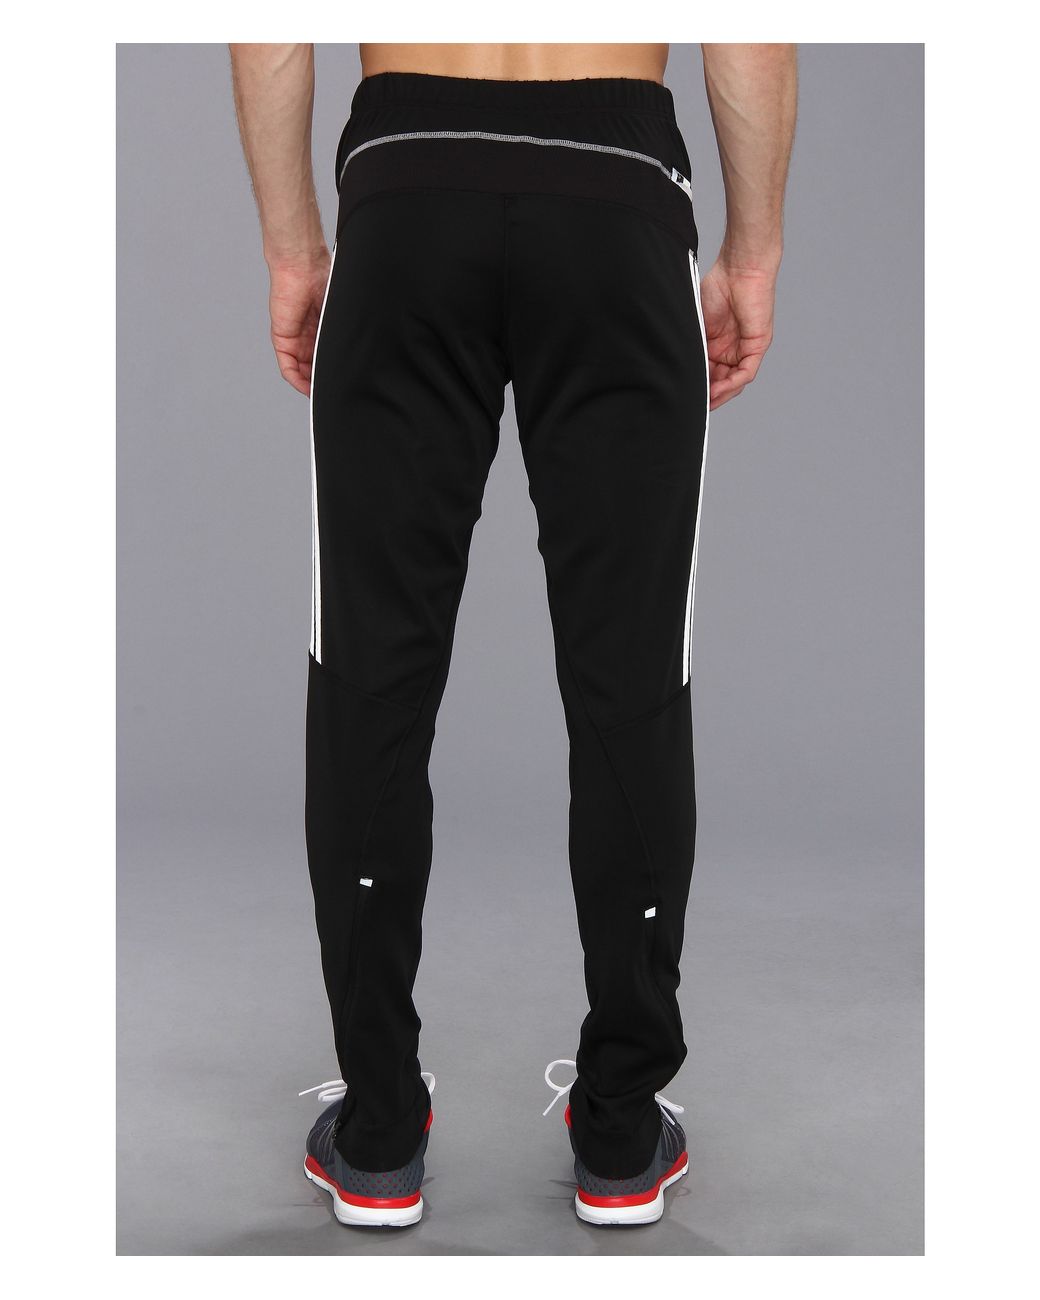 adidas Response Astro Pant in Black/White (Black) for Men | Lyst